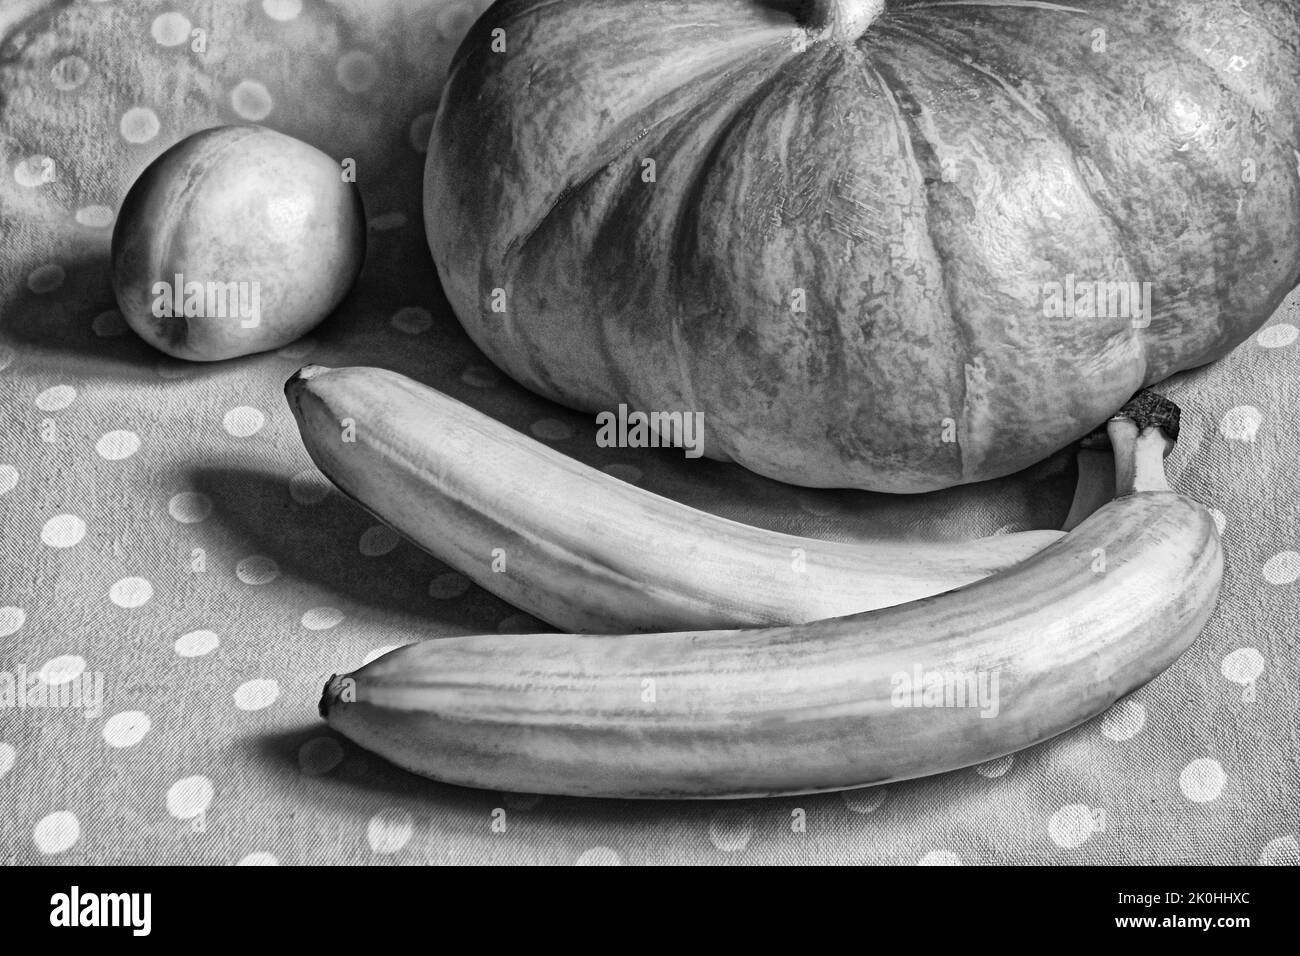 Photo vegetables and fruit,pumpkin, bananas, lemon Stock Photo